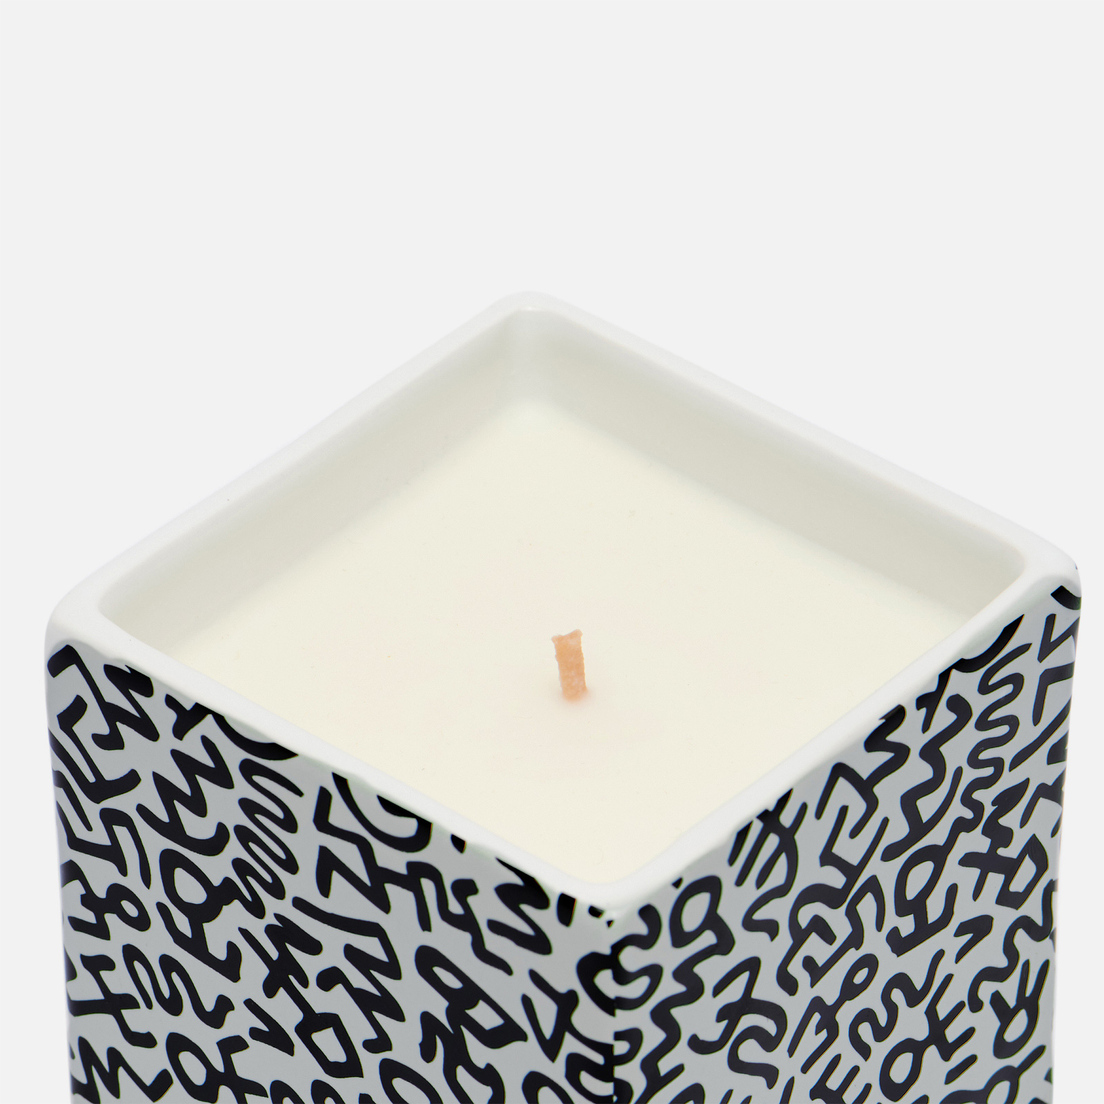 Ligne Blanche Ароматическая свеча Keith Haring Black Pattern